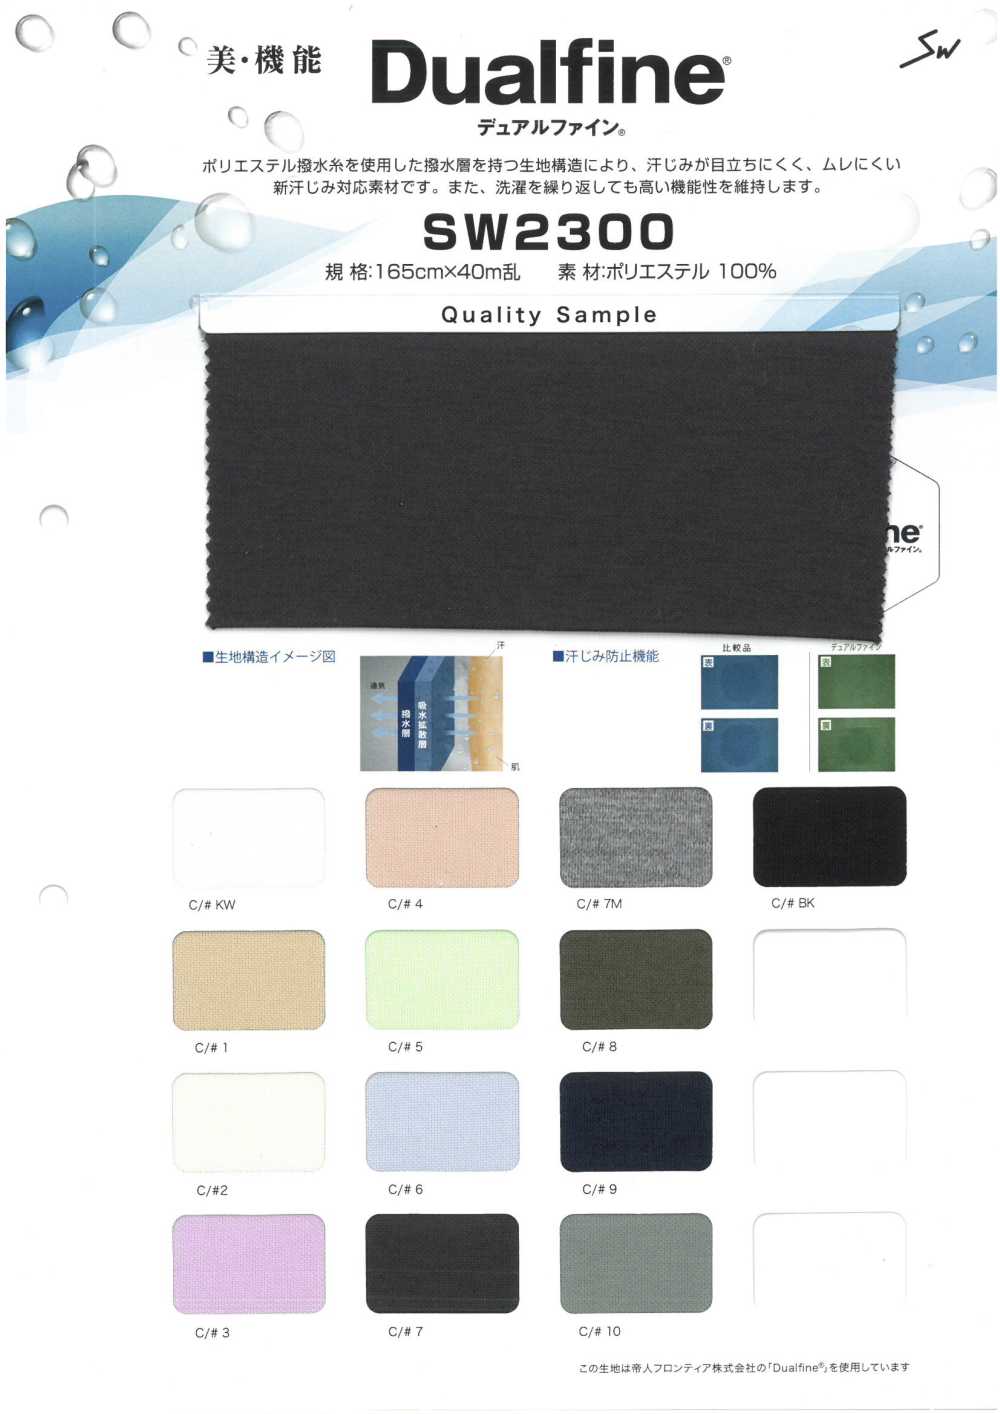 SW2300 Dual Fine®[Textile / Fabric] Sanwa Fibers